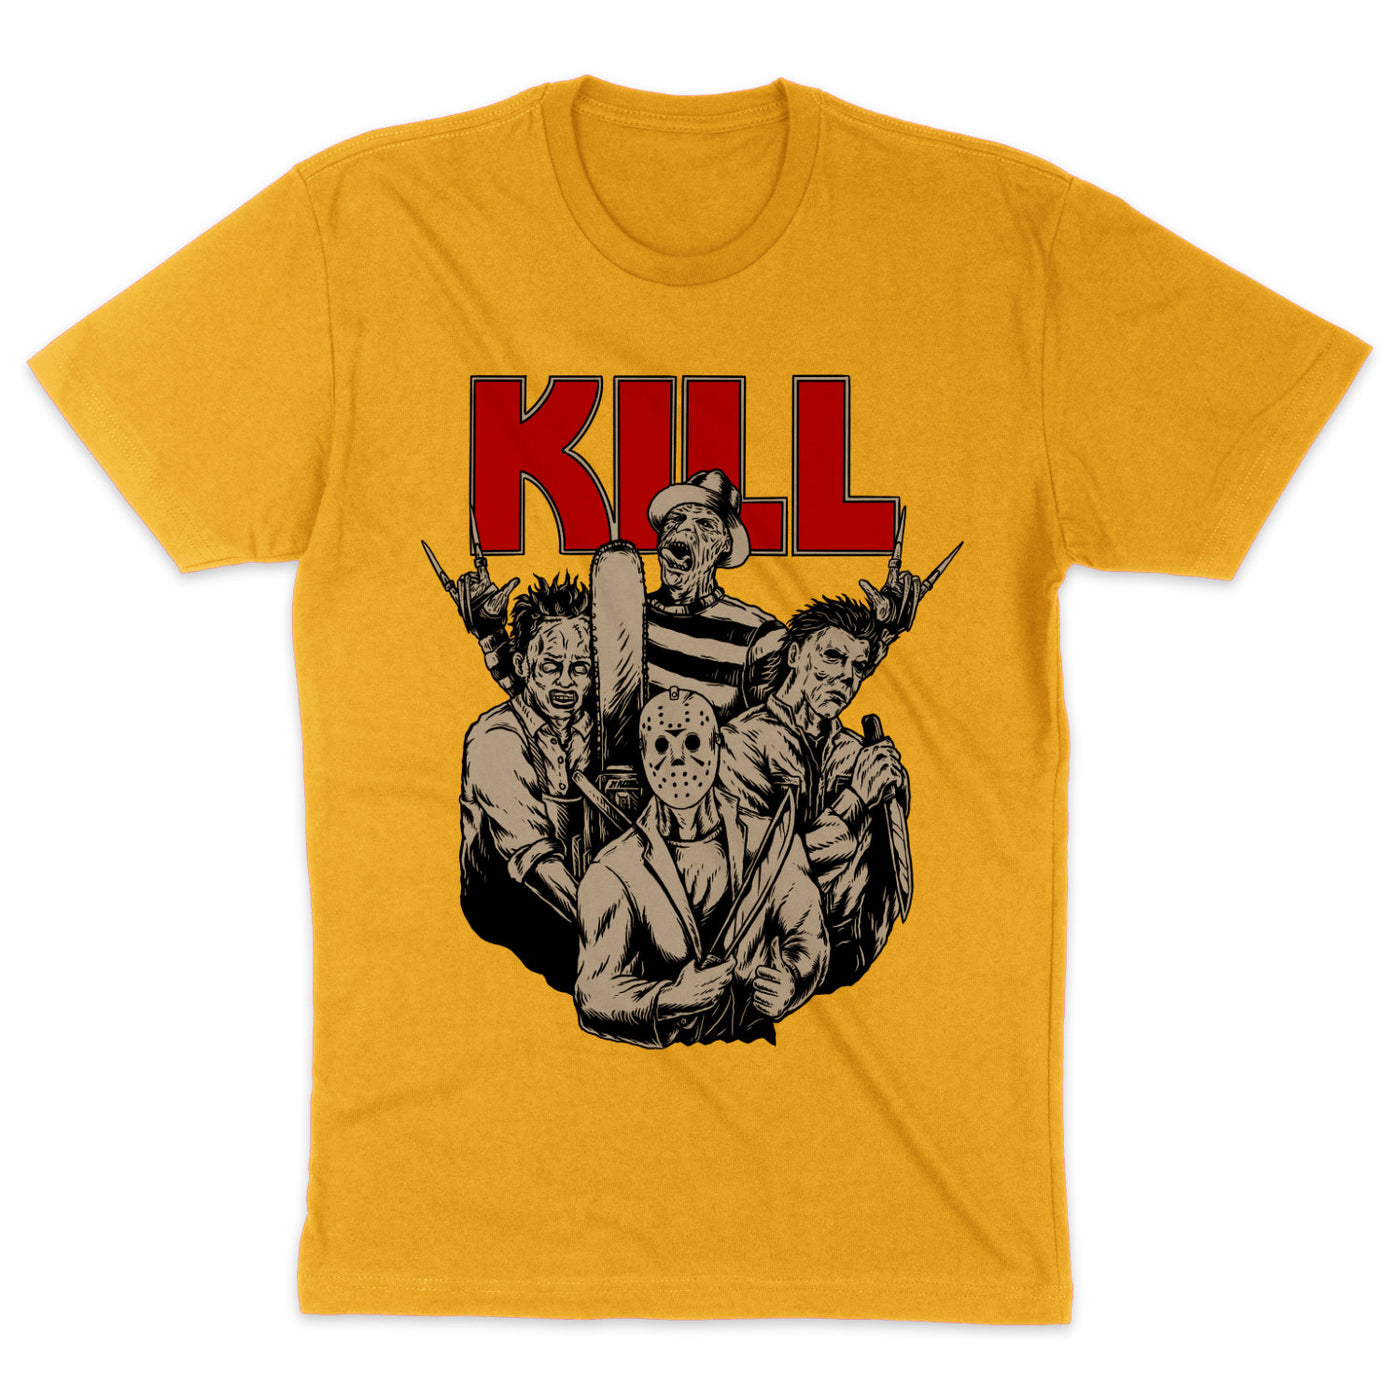 KILL Horror T-Shirt Halloween